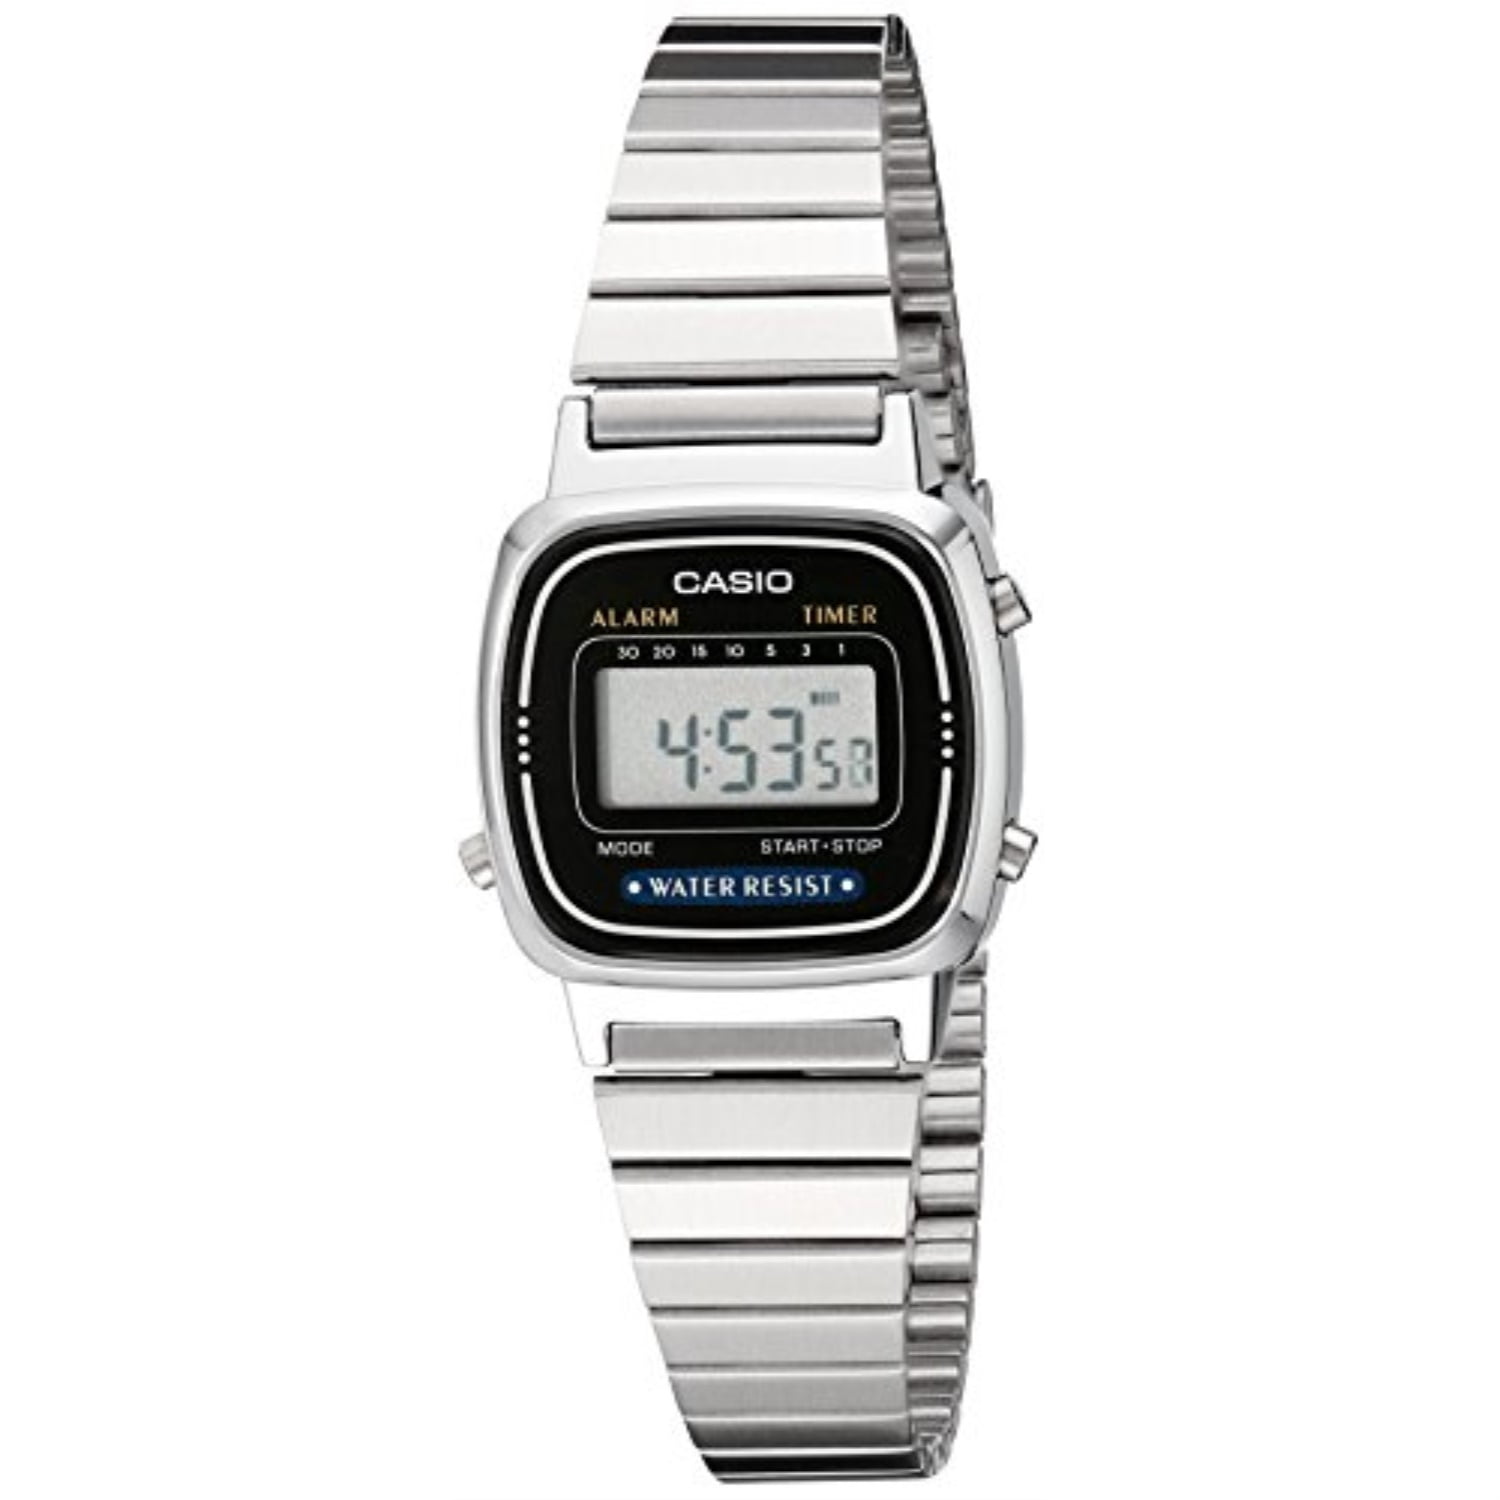 women's analog watch with alarm